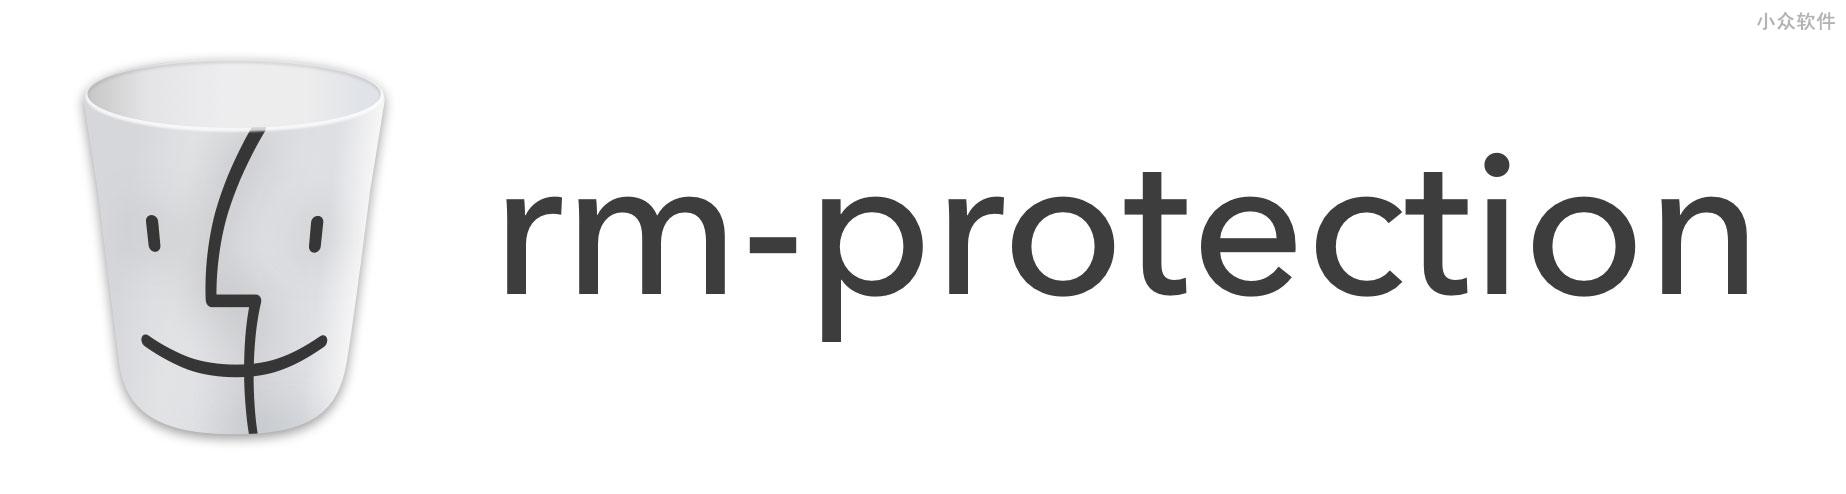 rm-protection – 防止误删除、预防 GitLab 事件再次发生